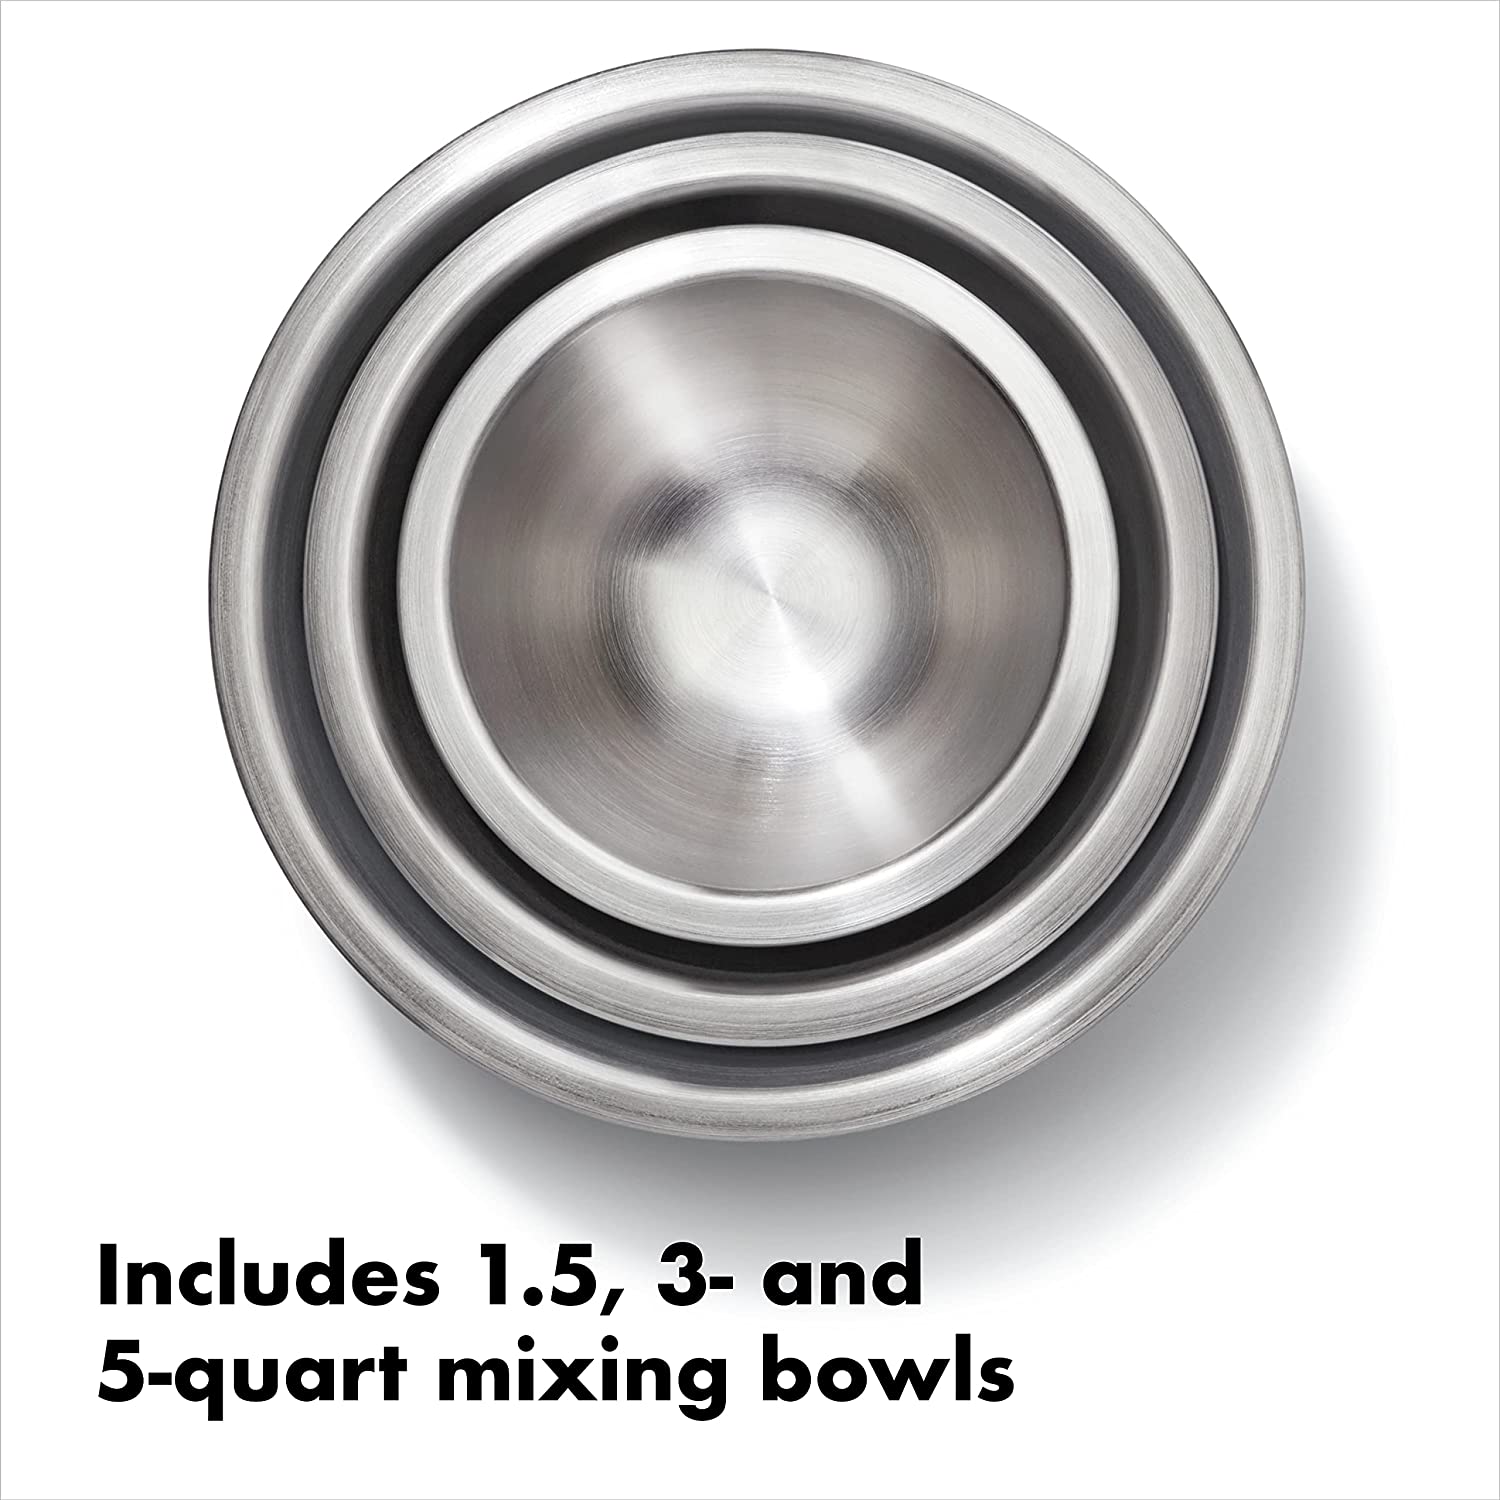 OXO Good Grips 3-Piece Mixing Bowl Set 